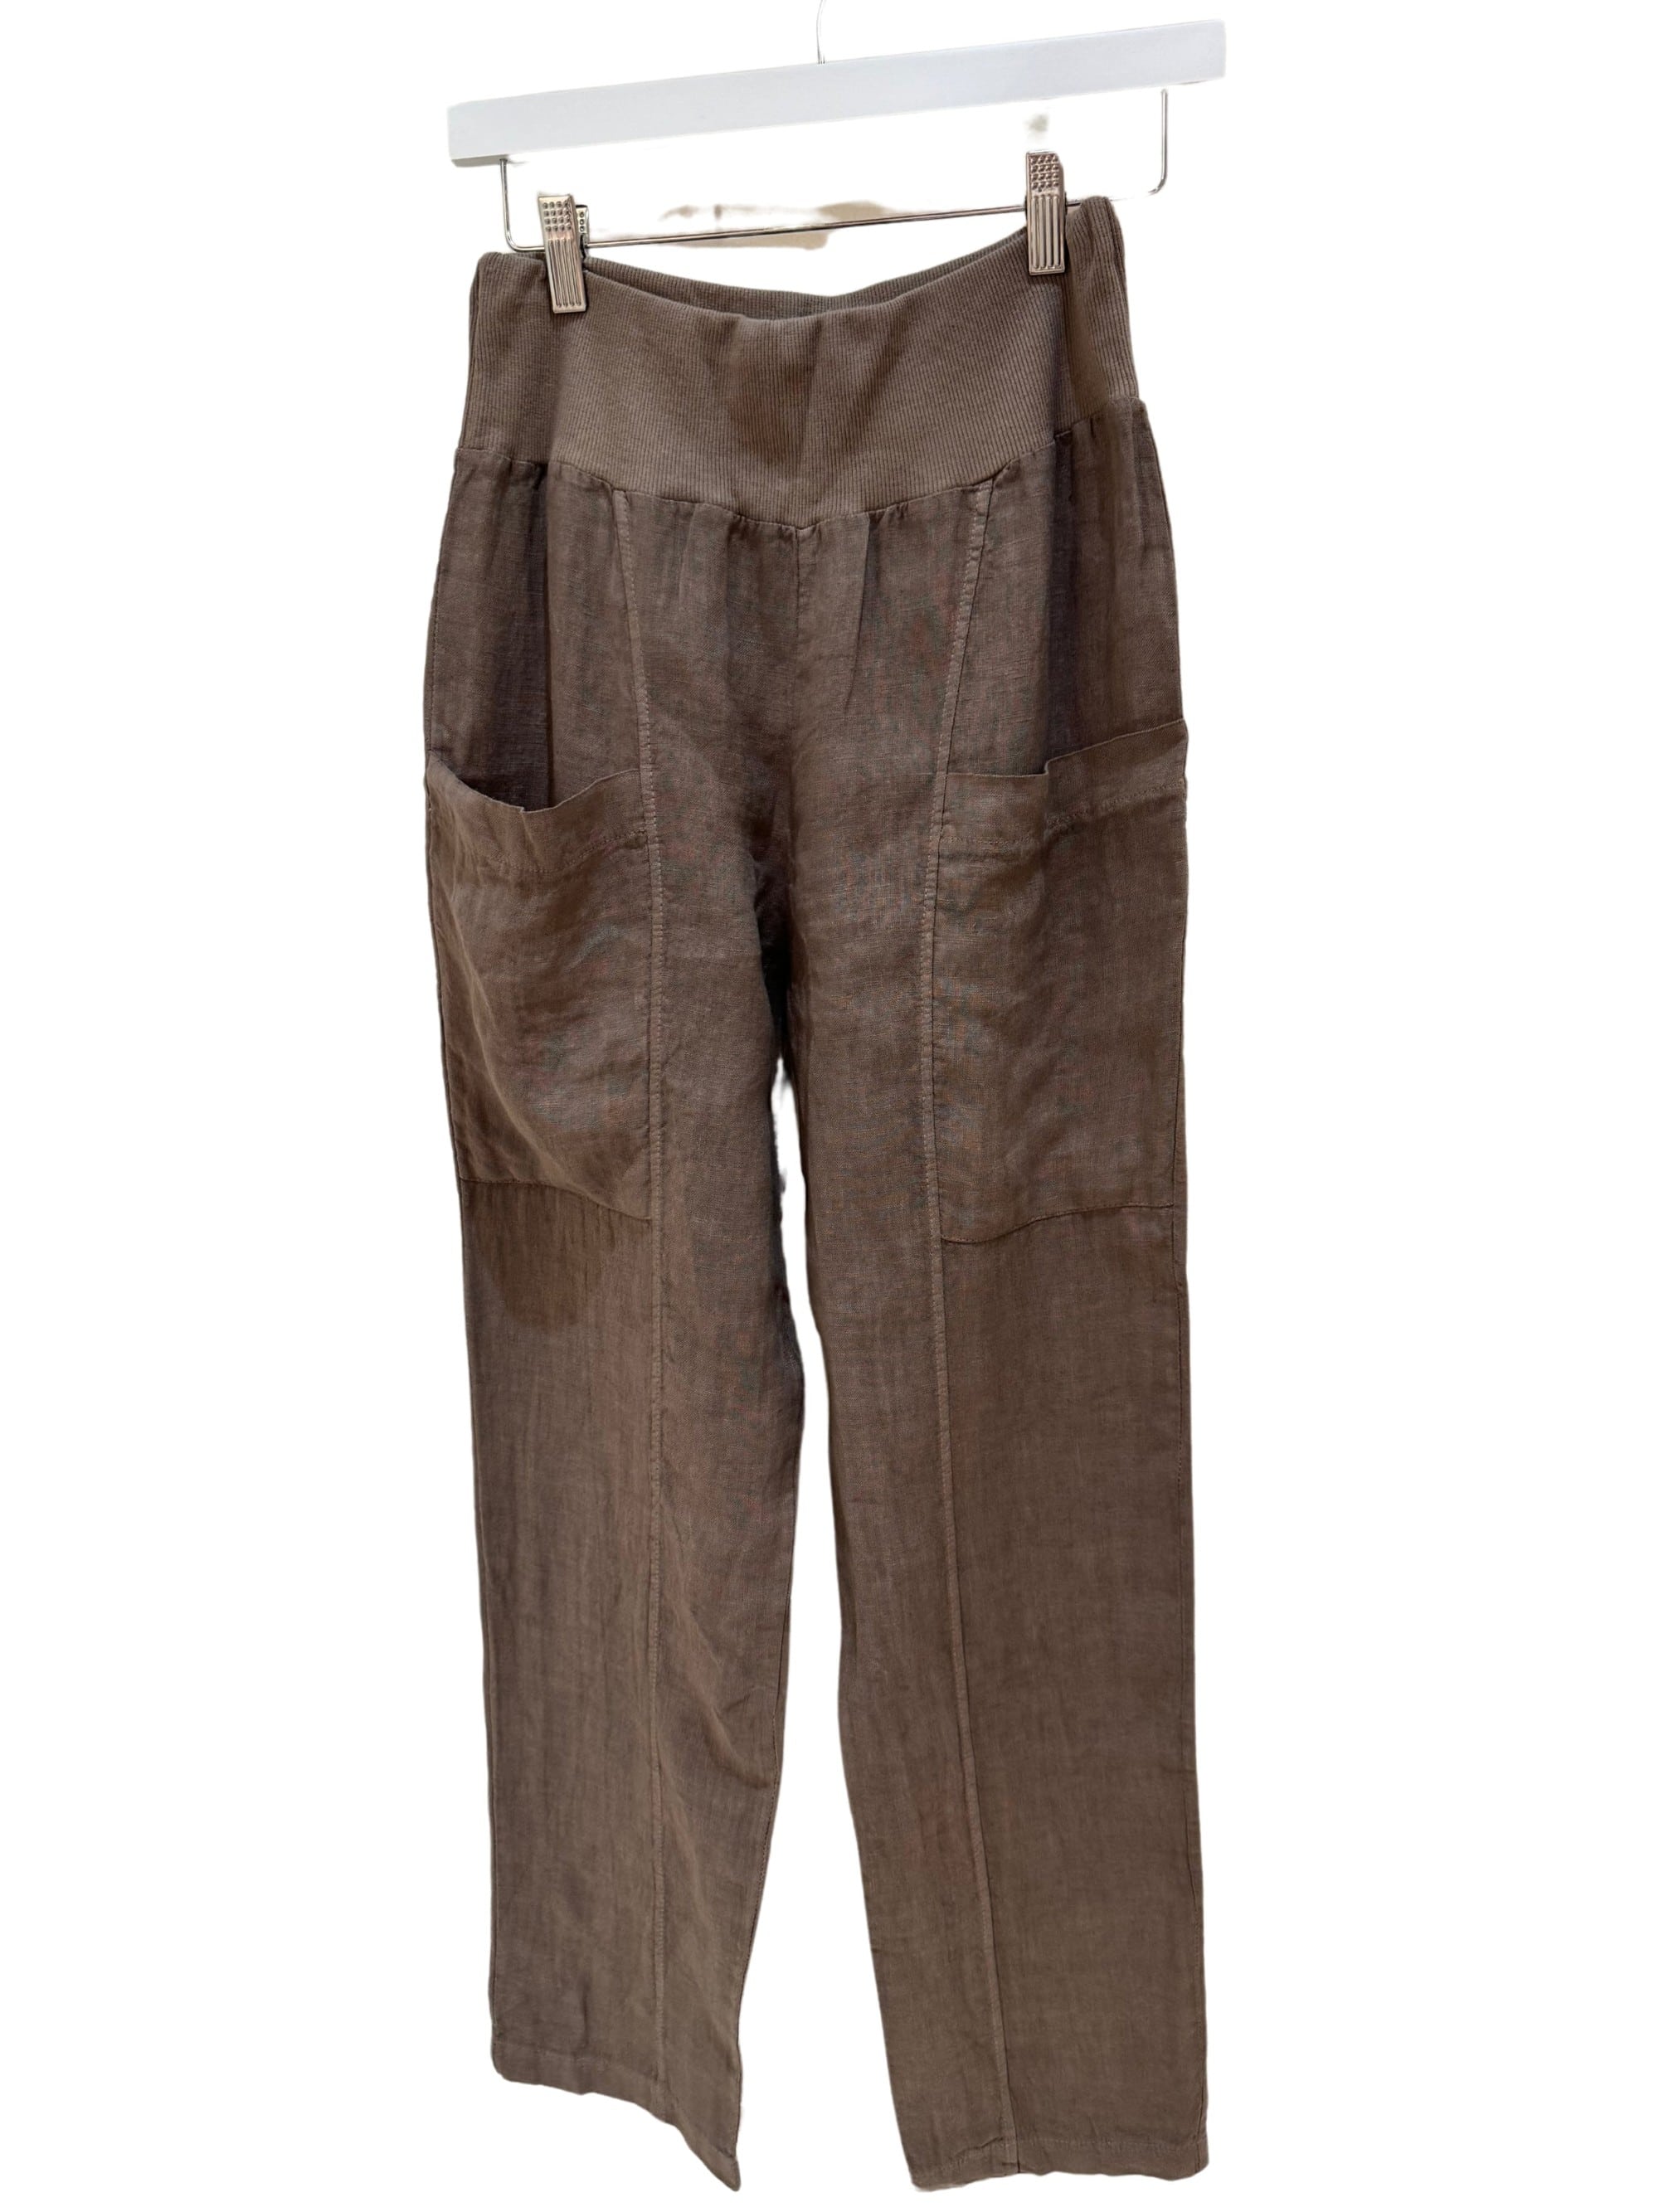 Inizio Linen Pants in Brown 